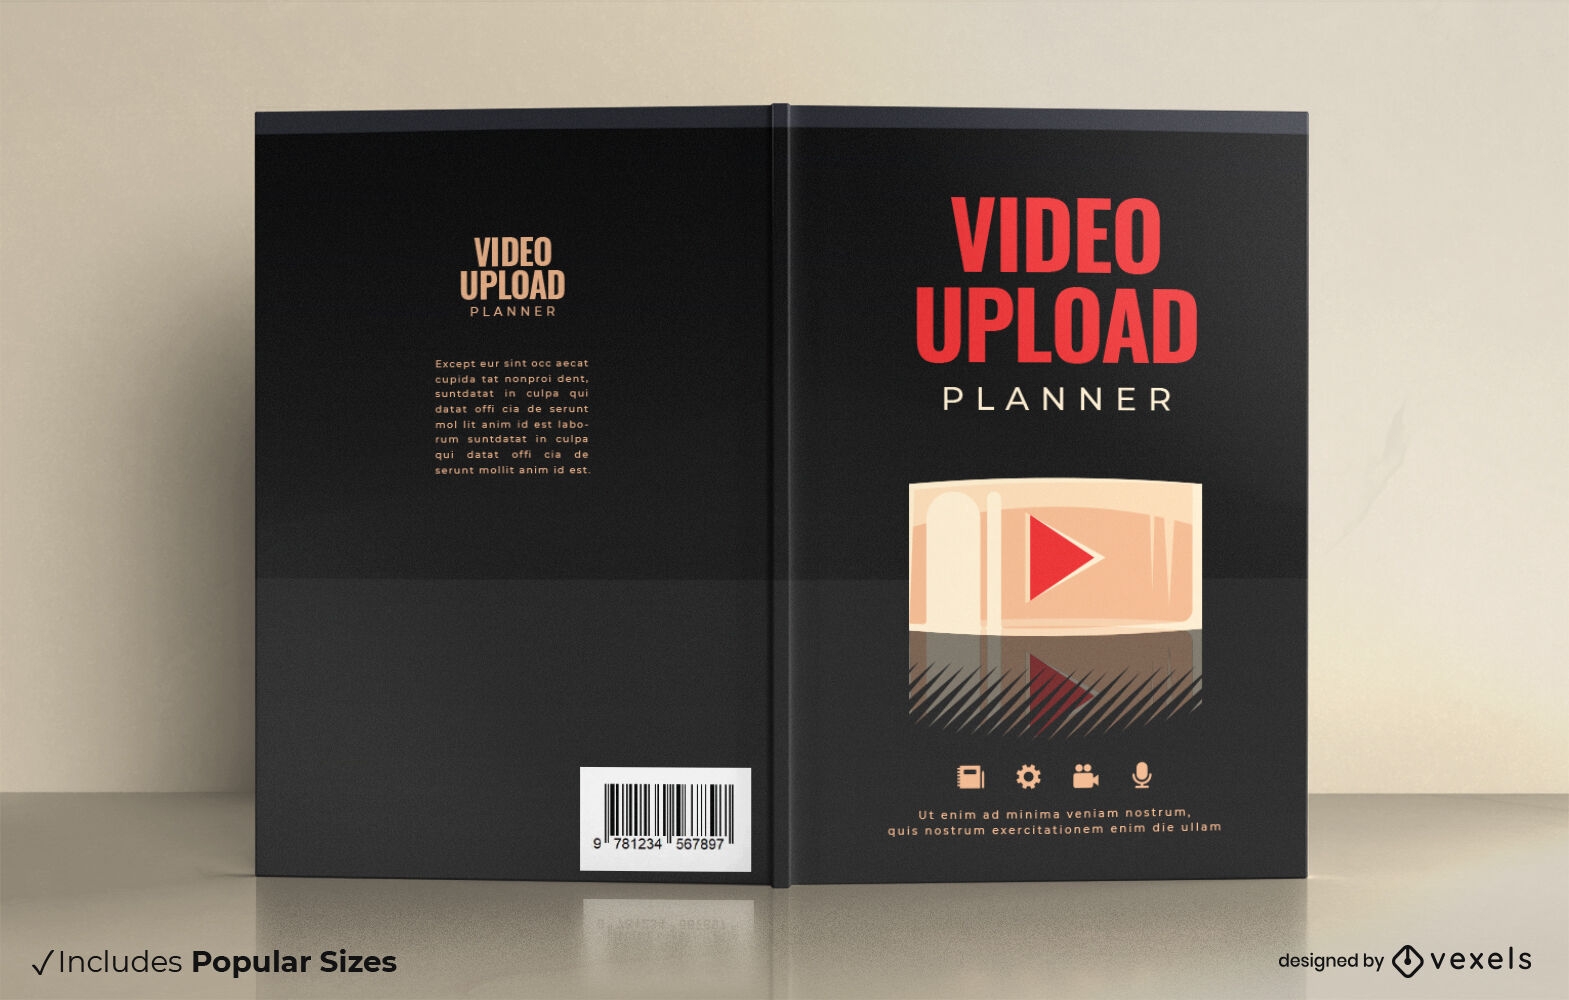 Video upload planner book cover design